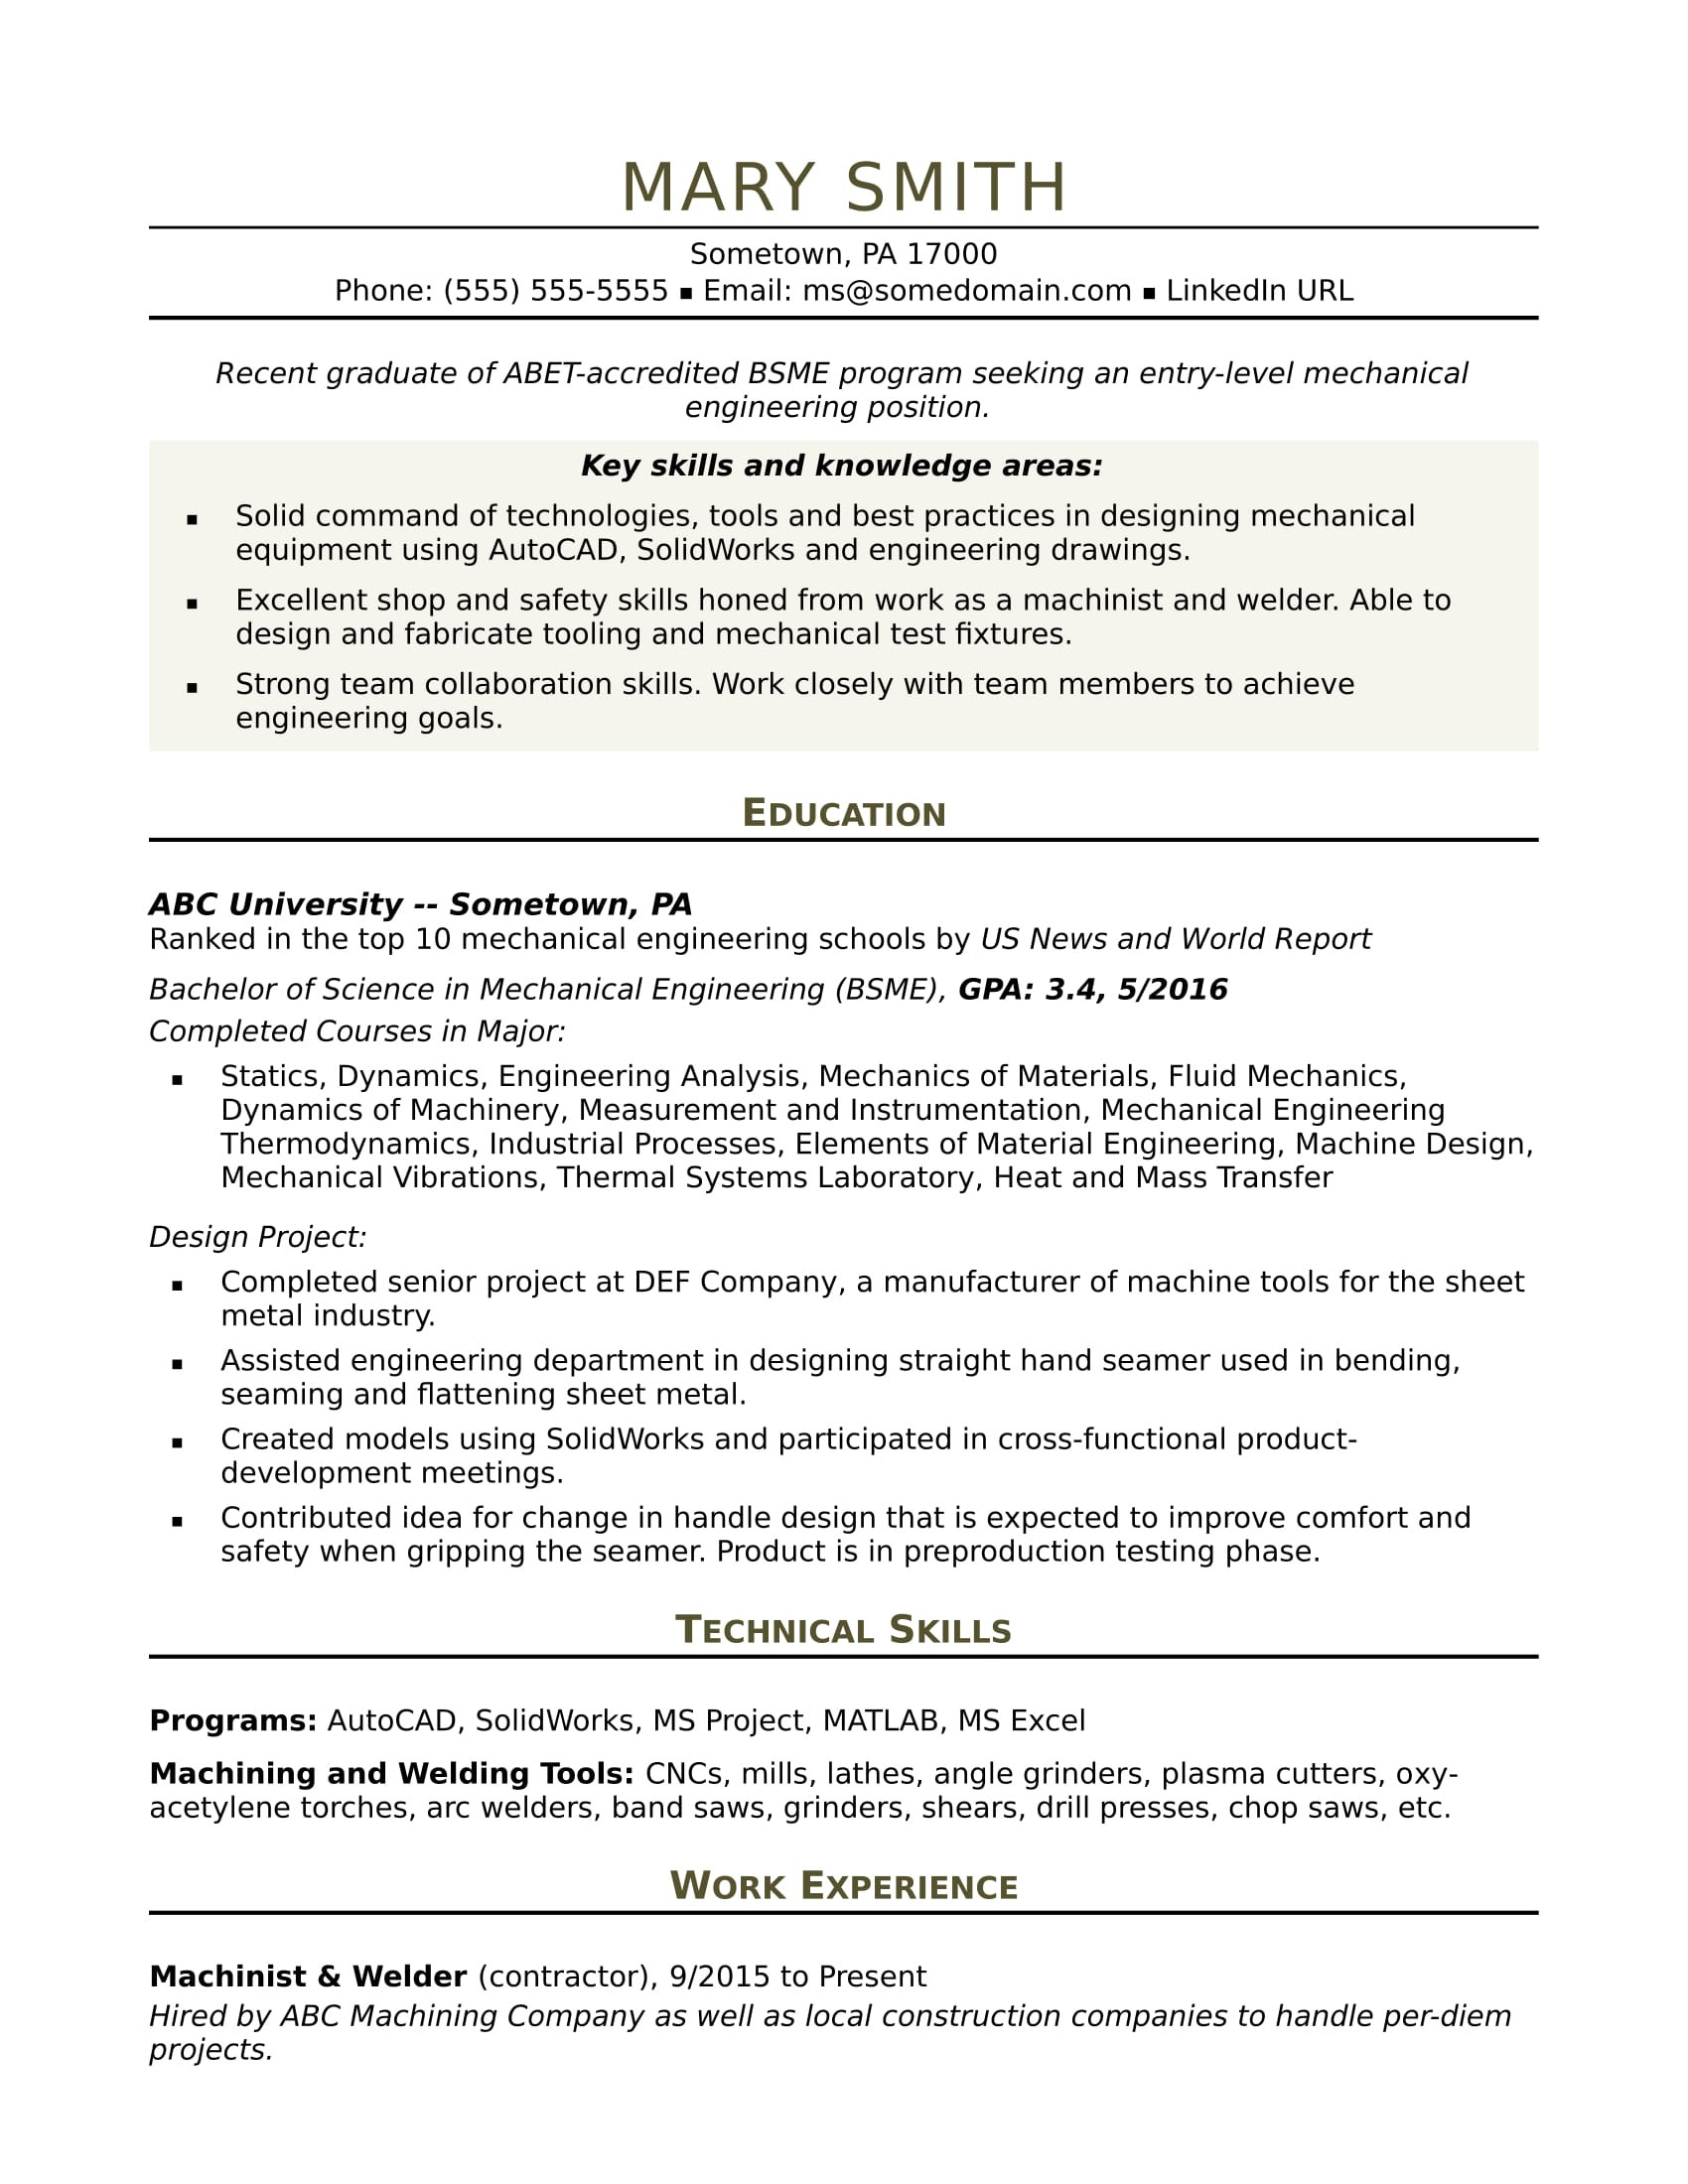 Indeed Sample Resume for Industrial Engineer Mechanical Engineer Resume: Entry-level Monster.com